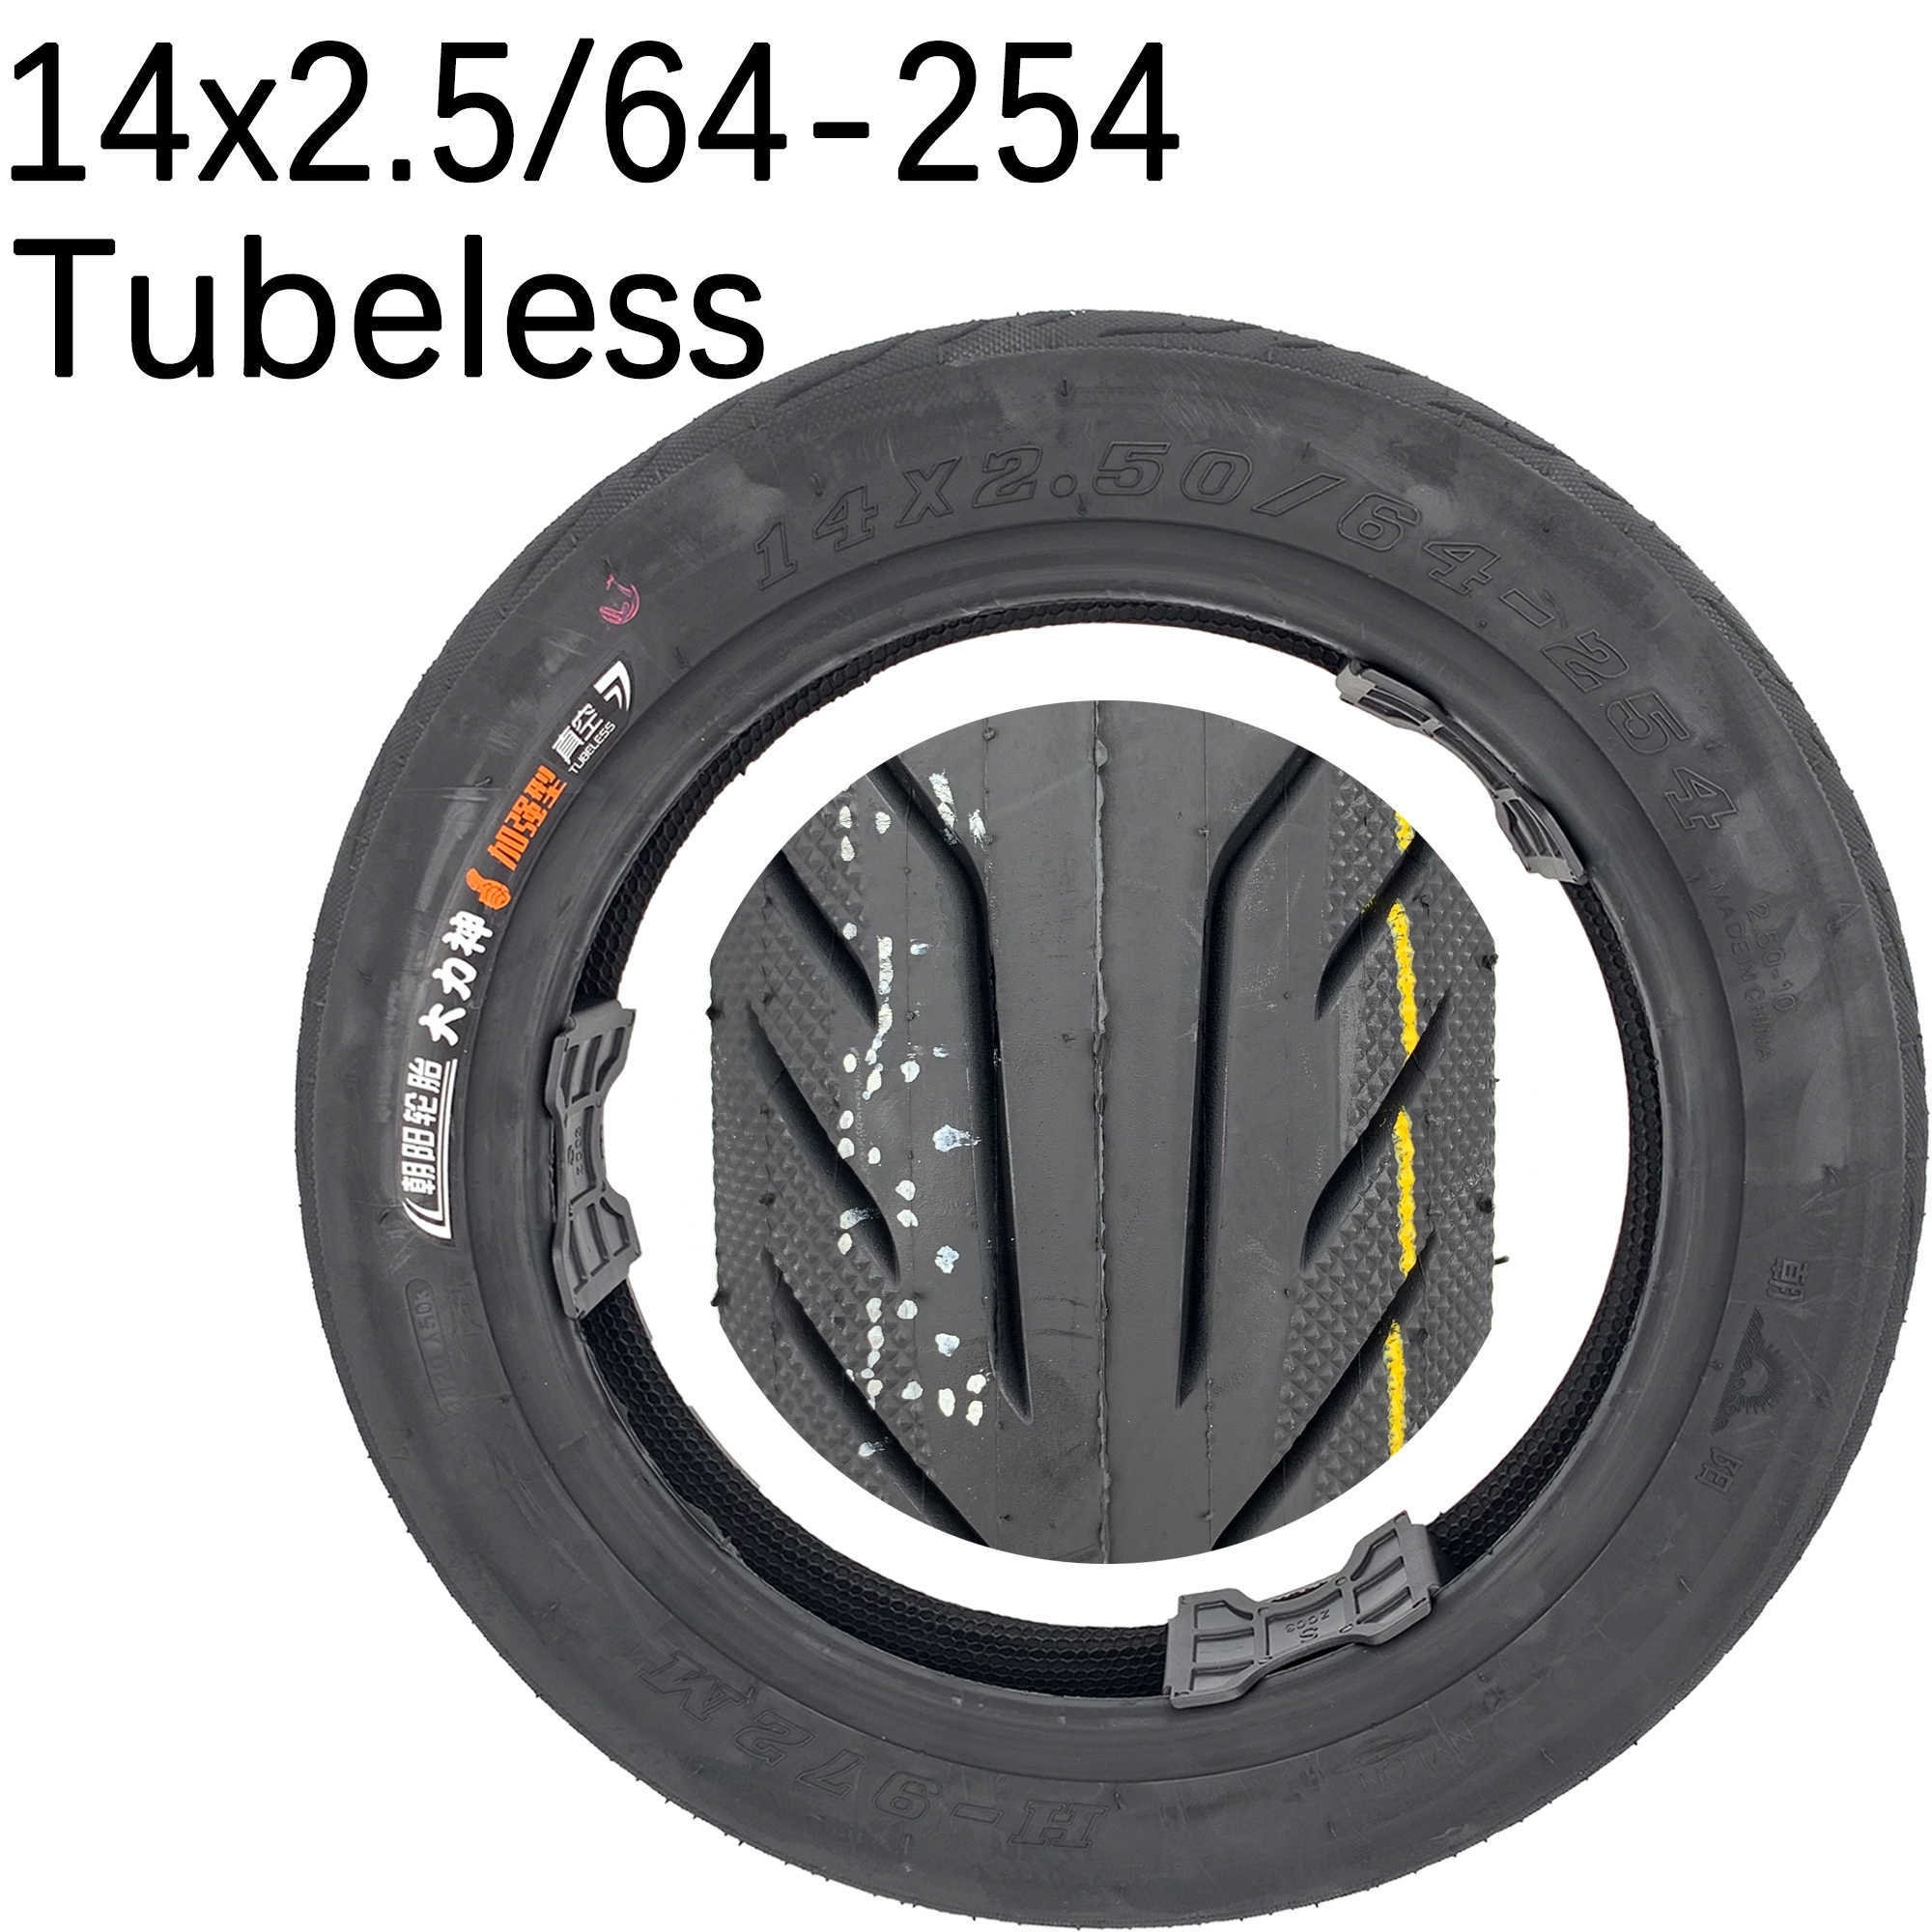 Bike Tires CHAOYANG H-972M 4PR electric bicycle tire tubeless 14x2.5/64-254 0213